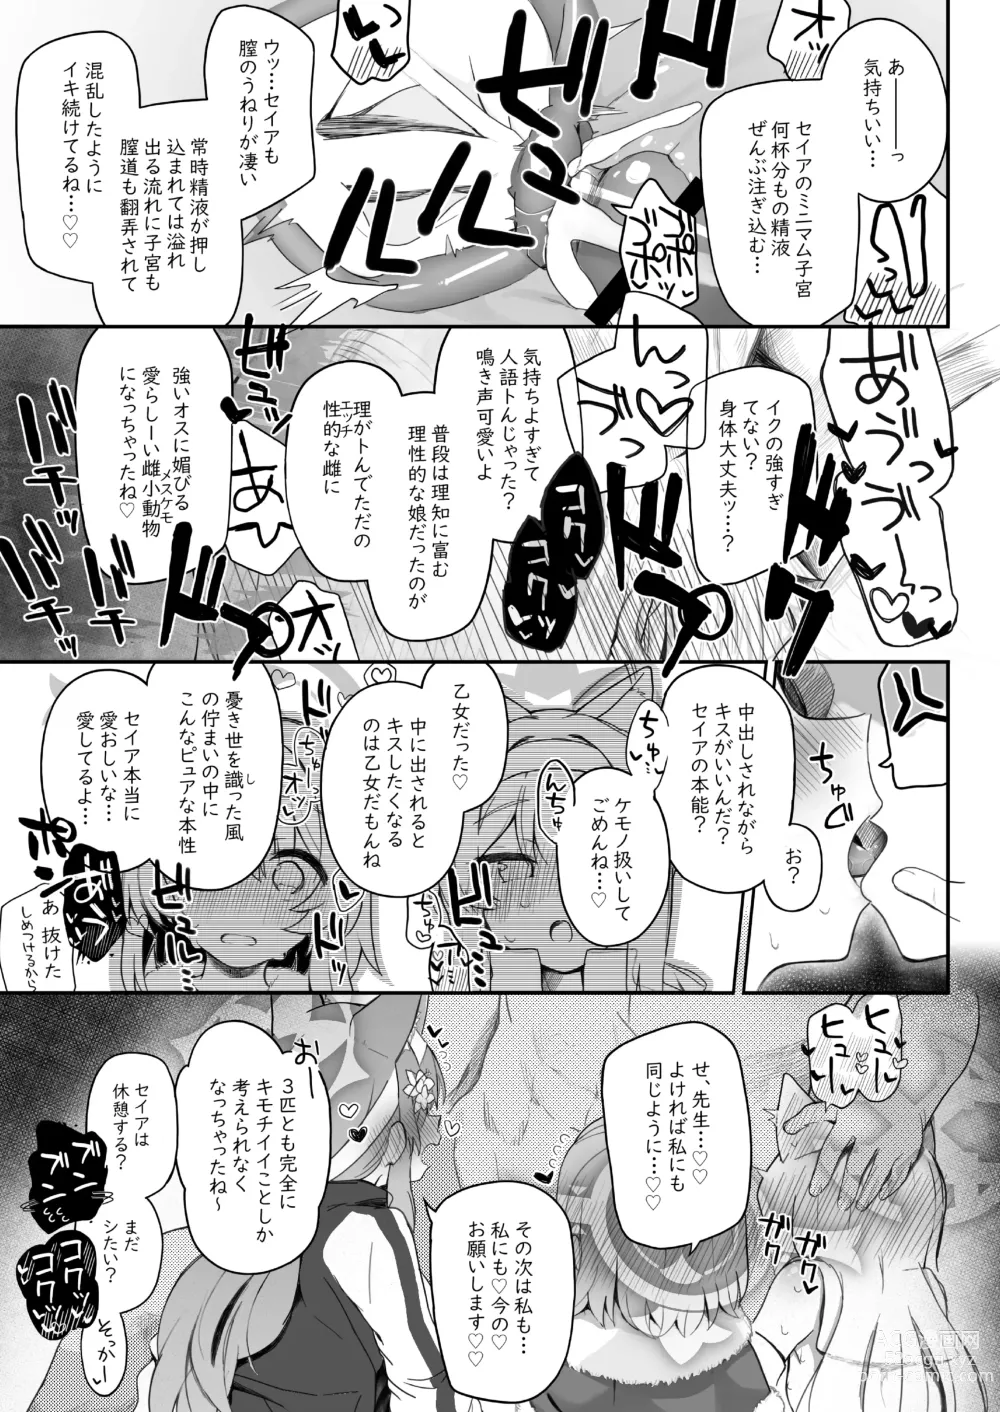 Page 31 of doujinshi Trinity no Seijyotachi